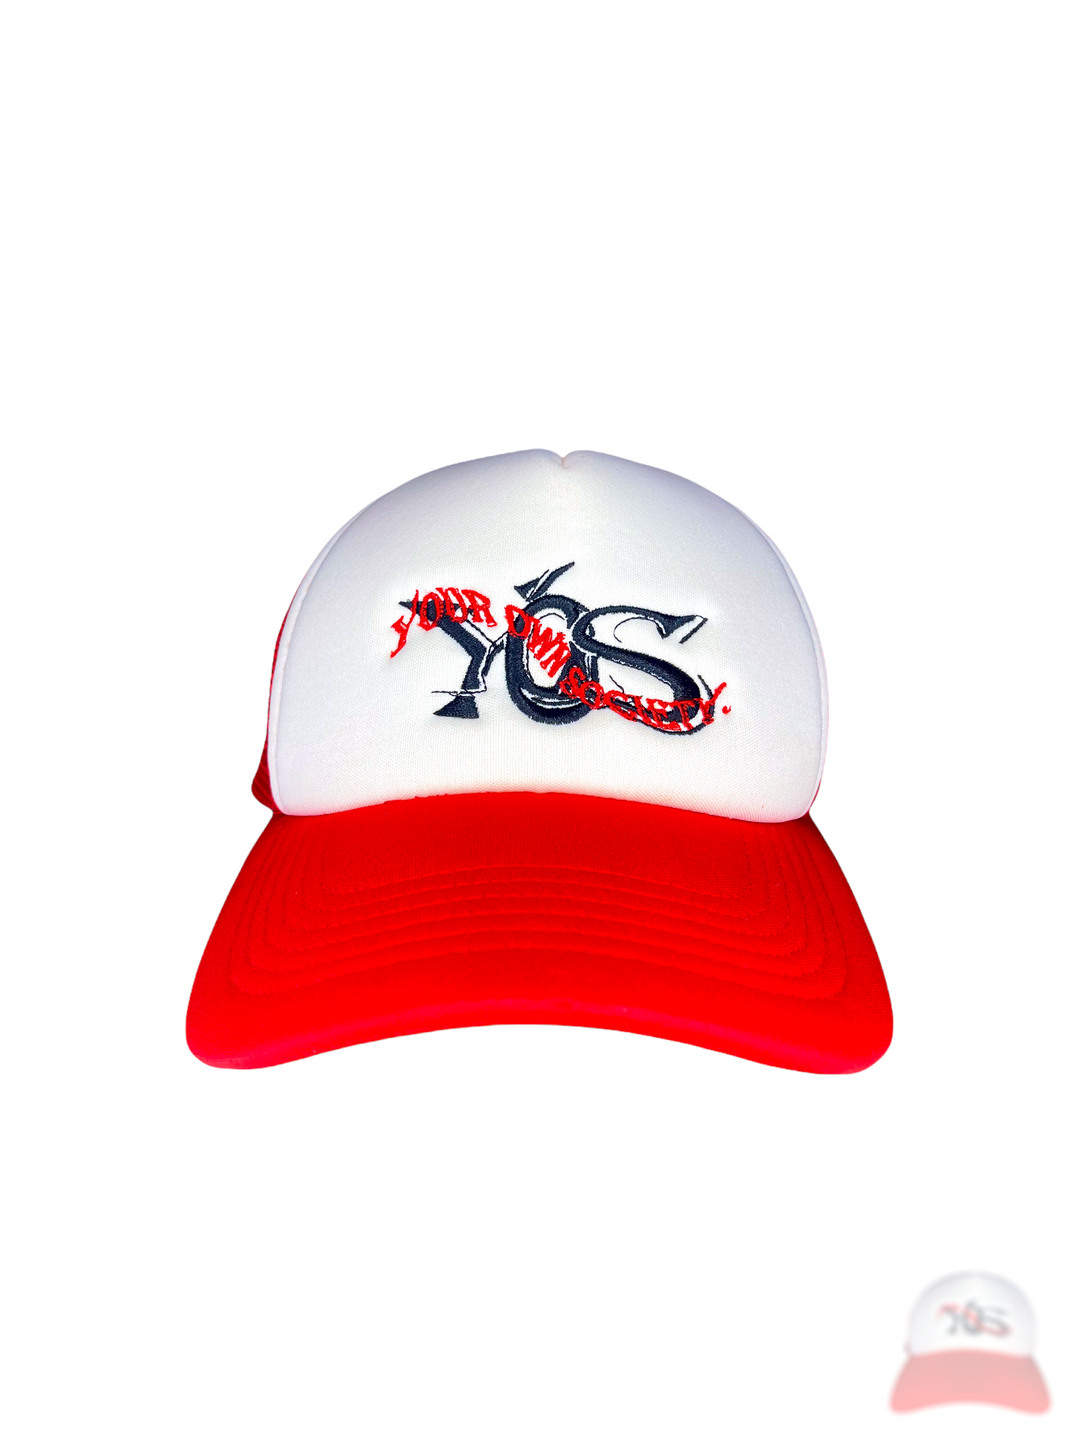 Yos Trucker Hat